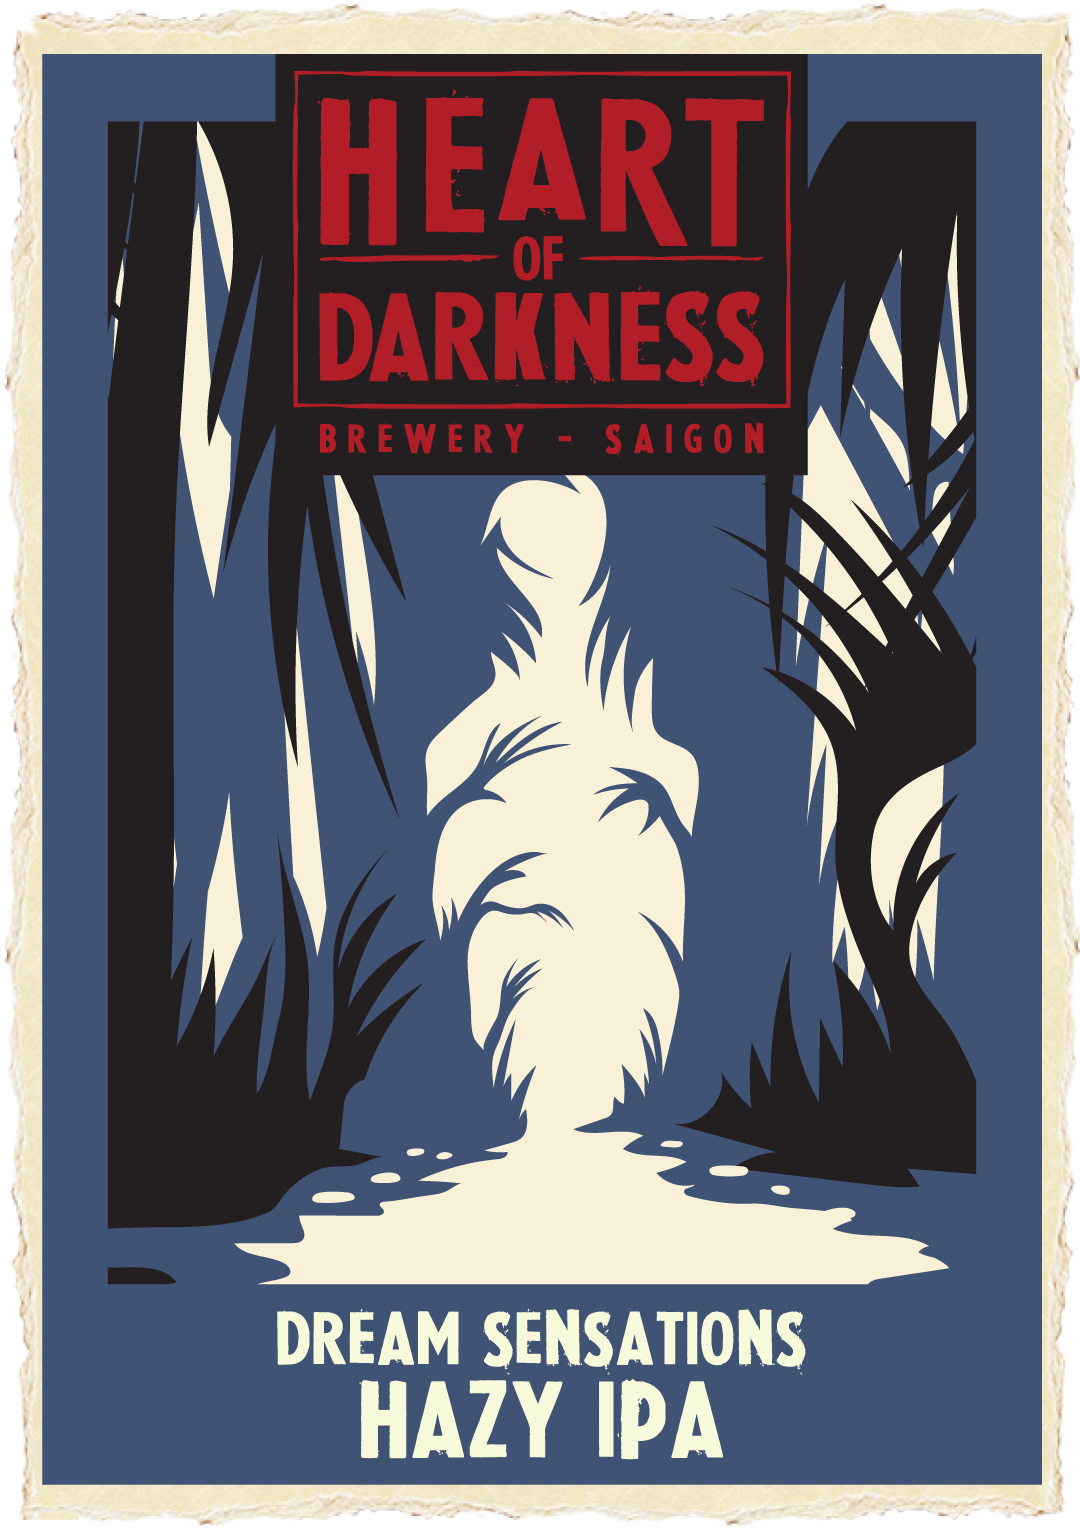 Dream Sensations Hazy IPA Heart Of Darkness Brewery